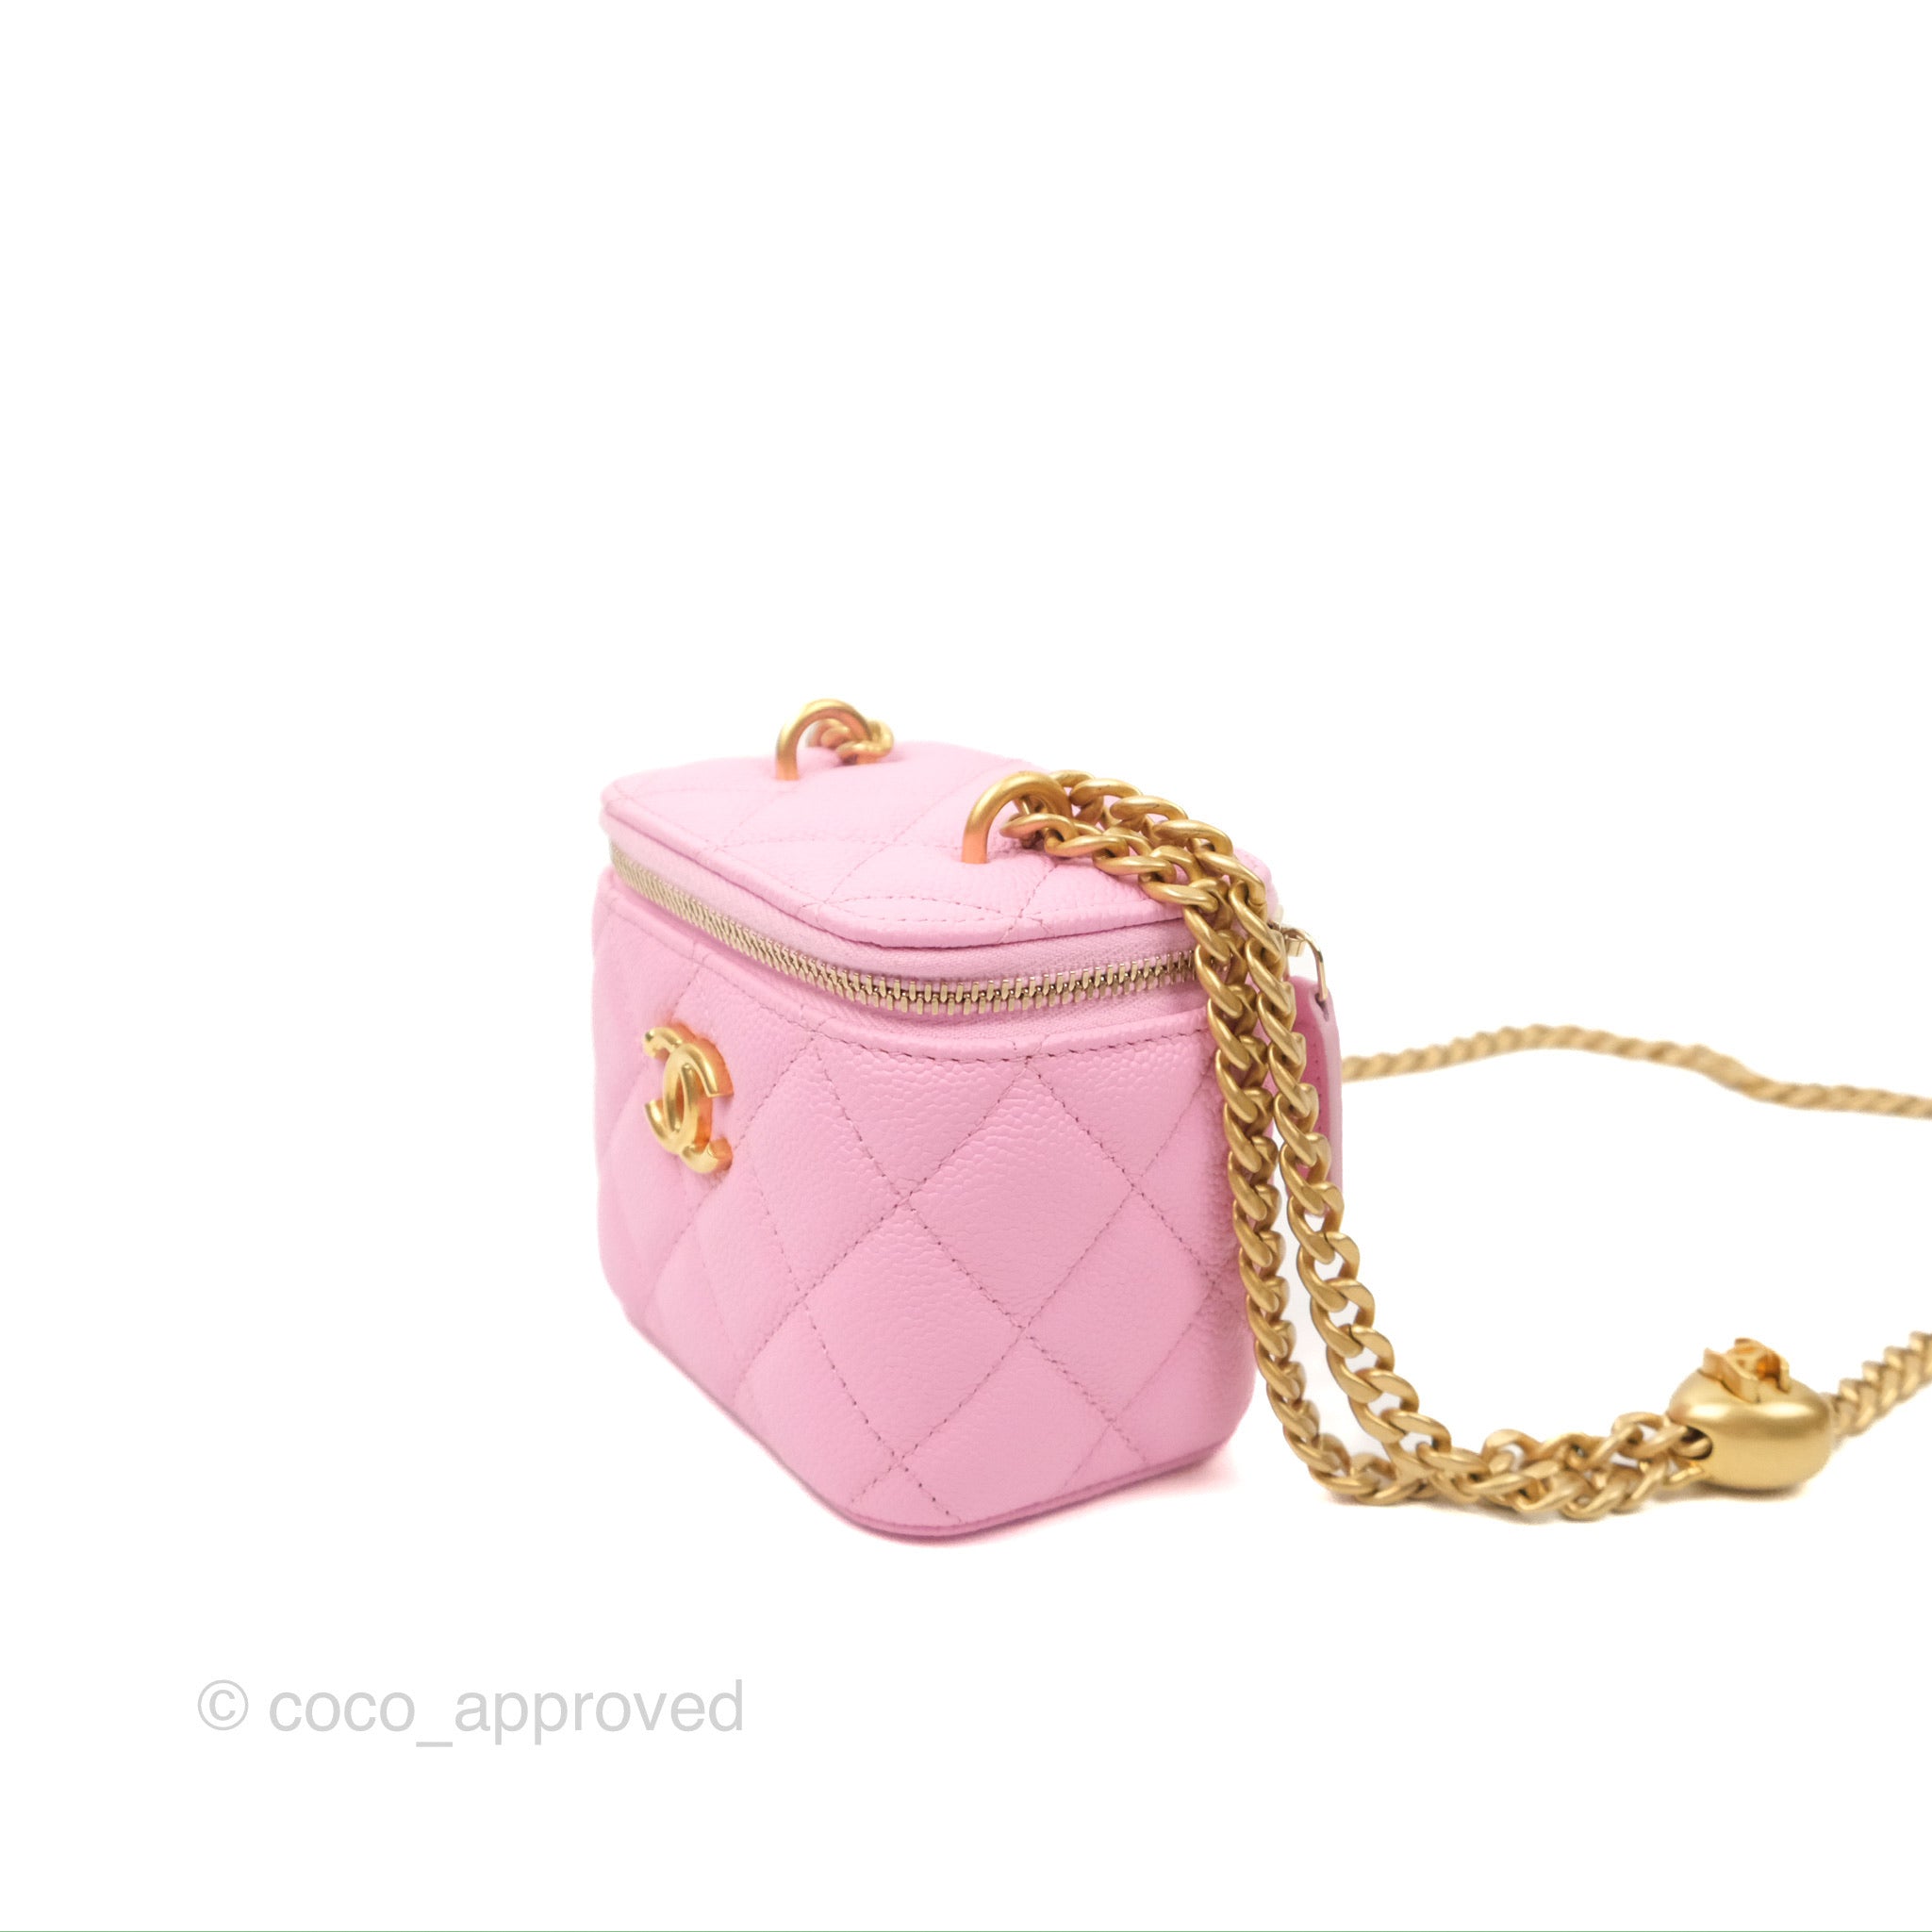 Chanel Gold Bag - 1,970 For Sale on 1stDibs